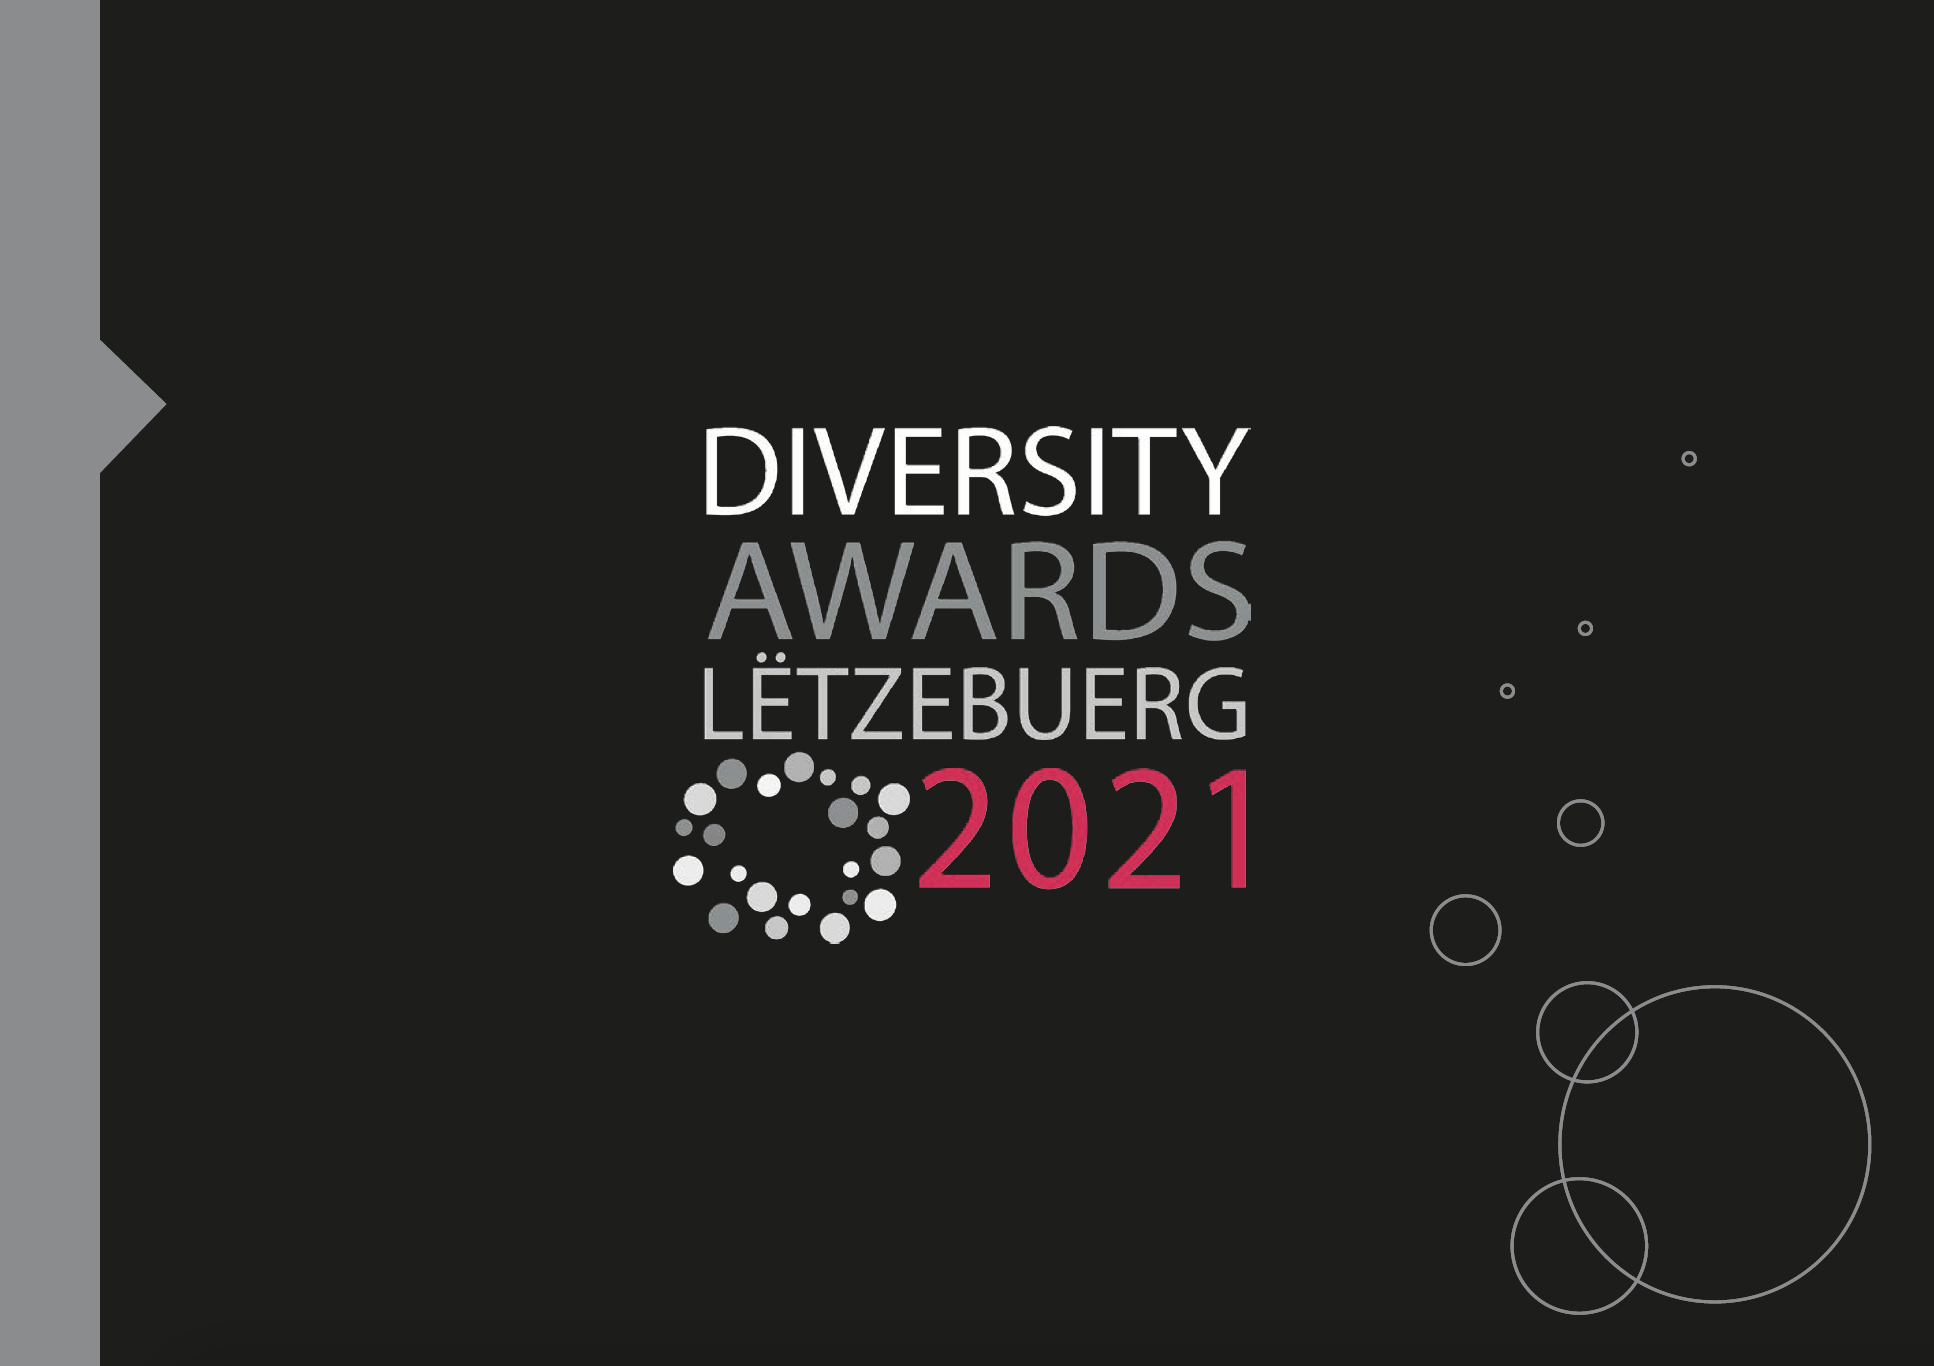 Diversity Awards Lëtzebuerg 2021 brochure